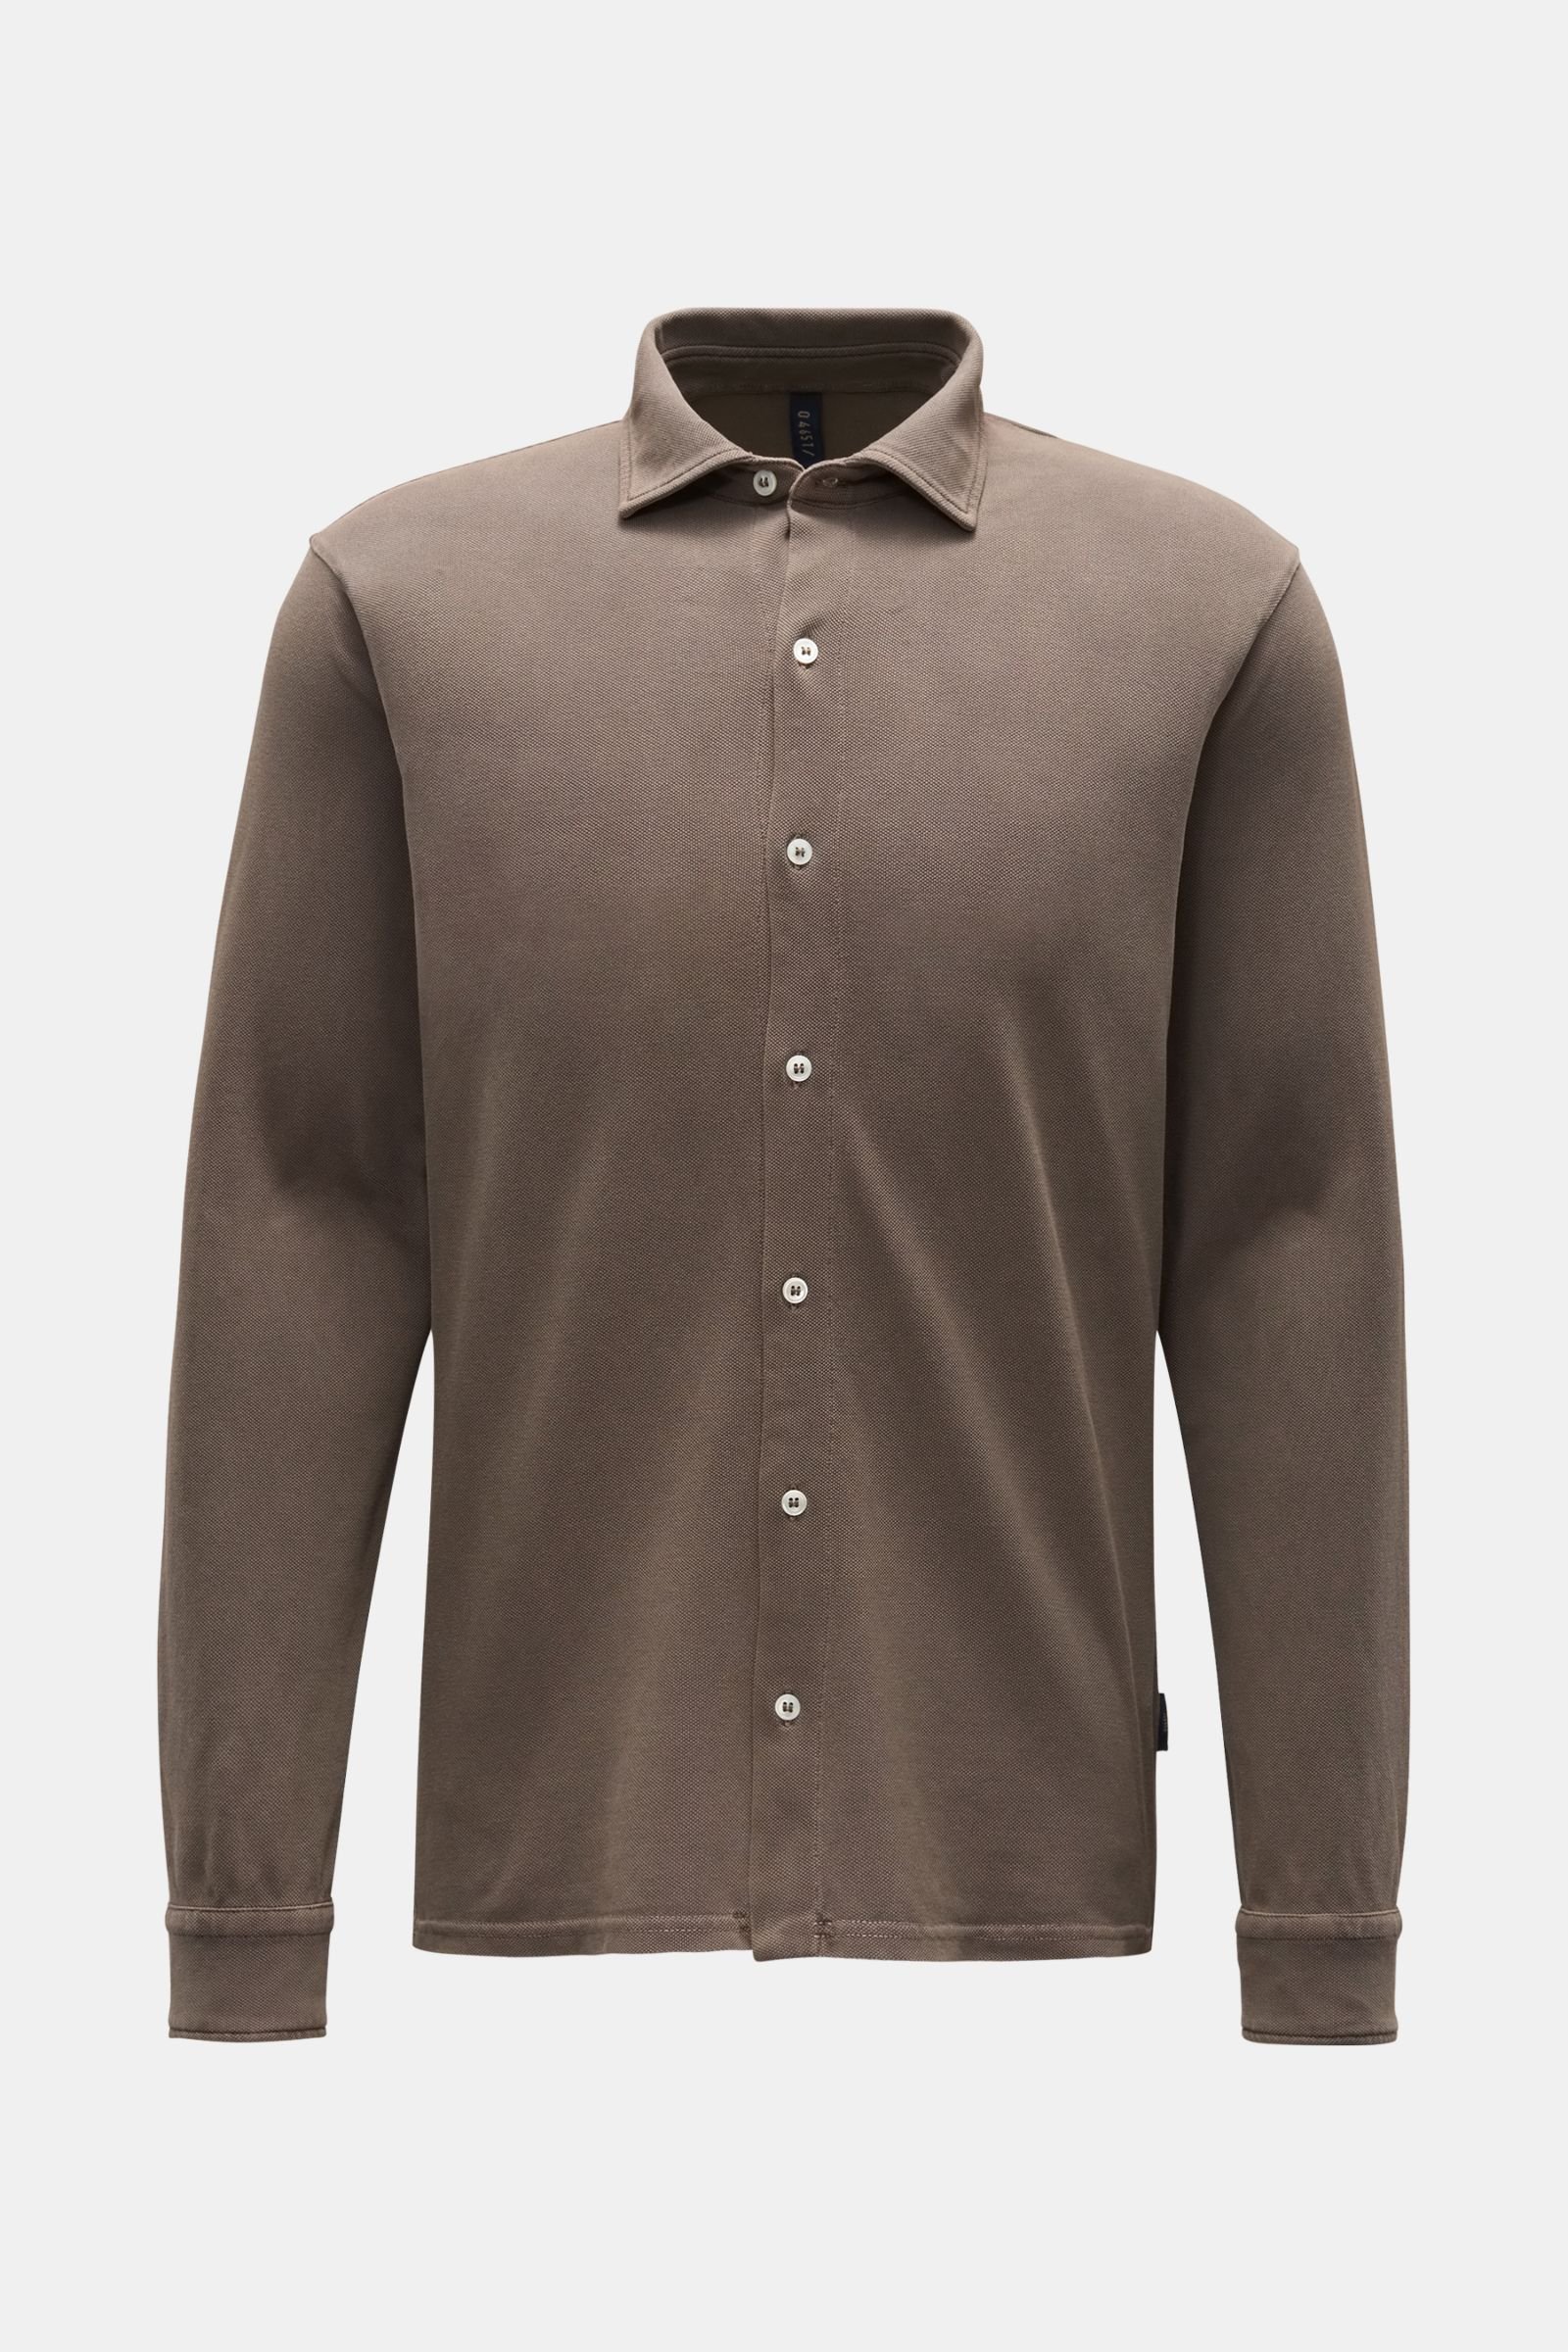 Piqué shirt slim collar grey-brown